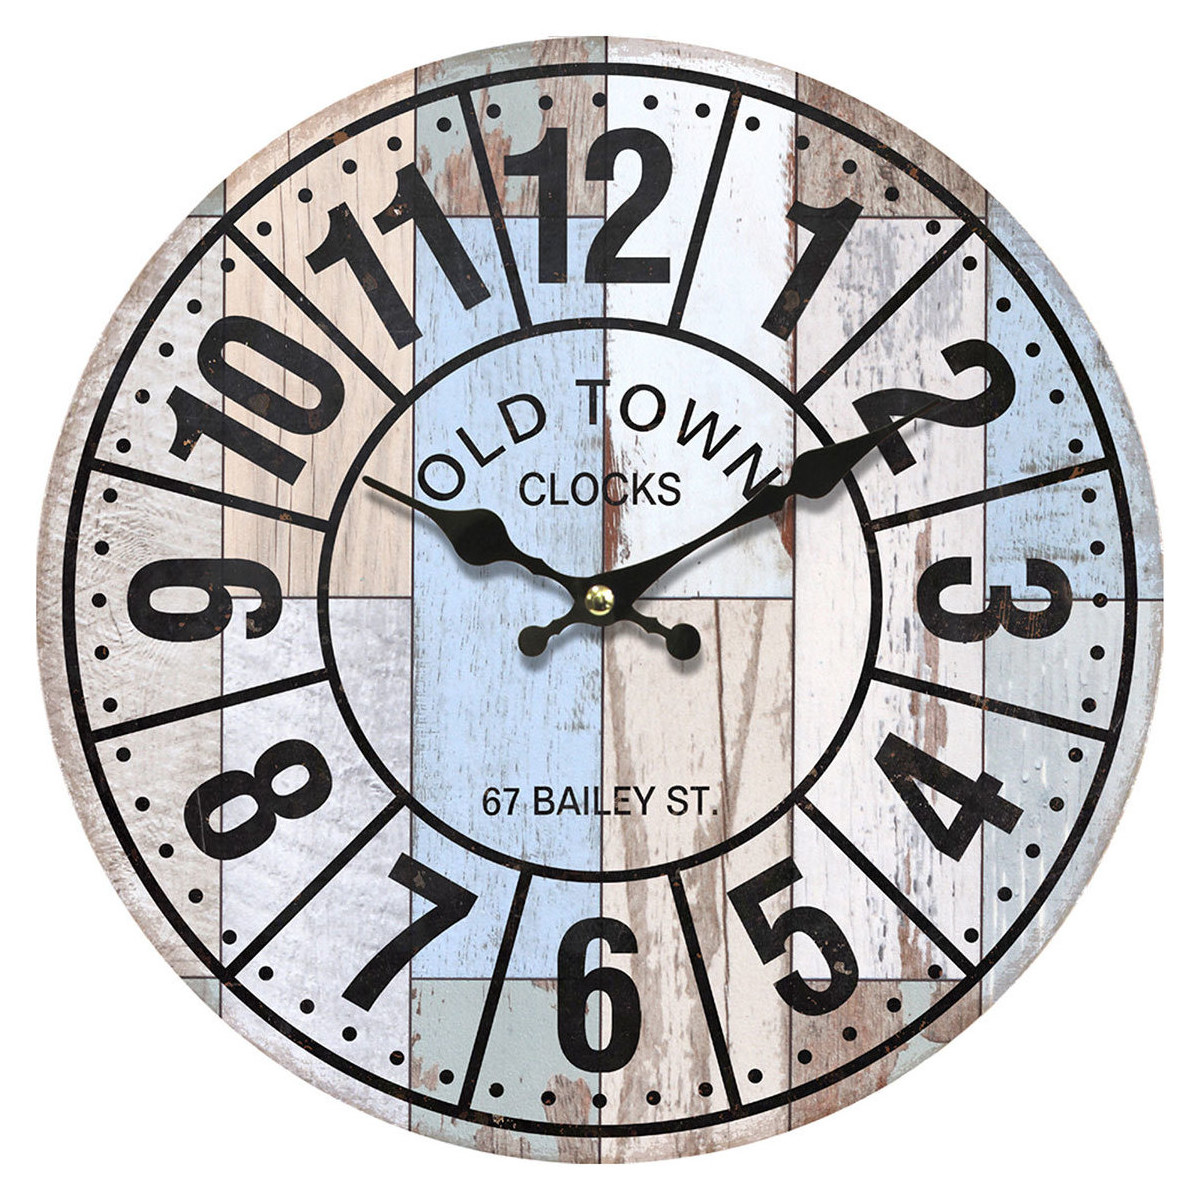 Casa Relojes Signes Grimalt Reloj Pared Old Town Gris